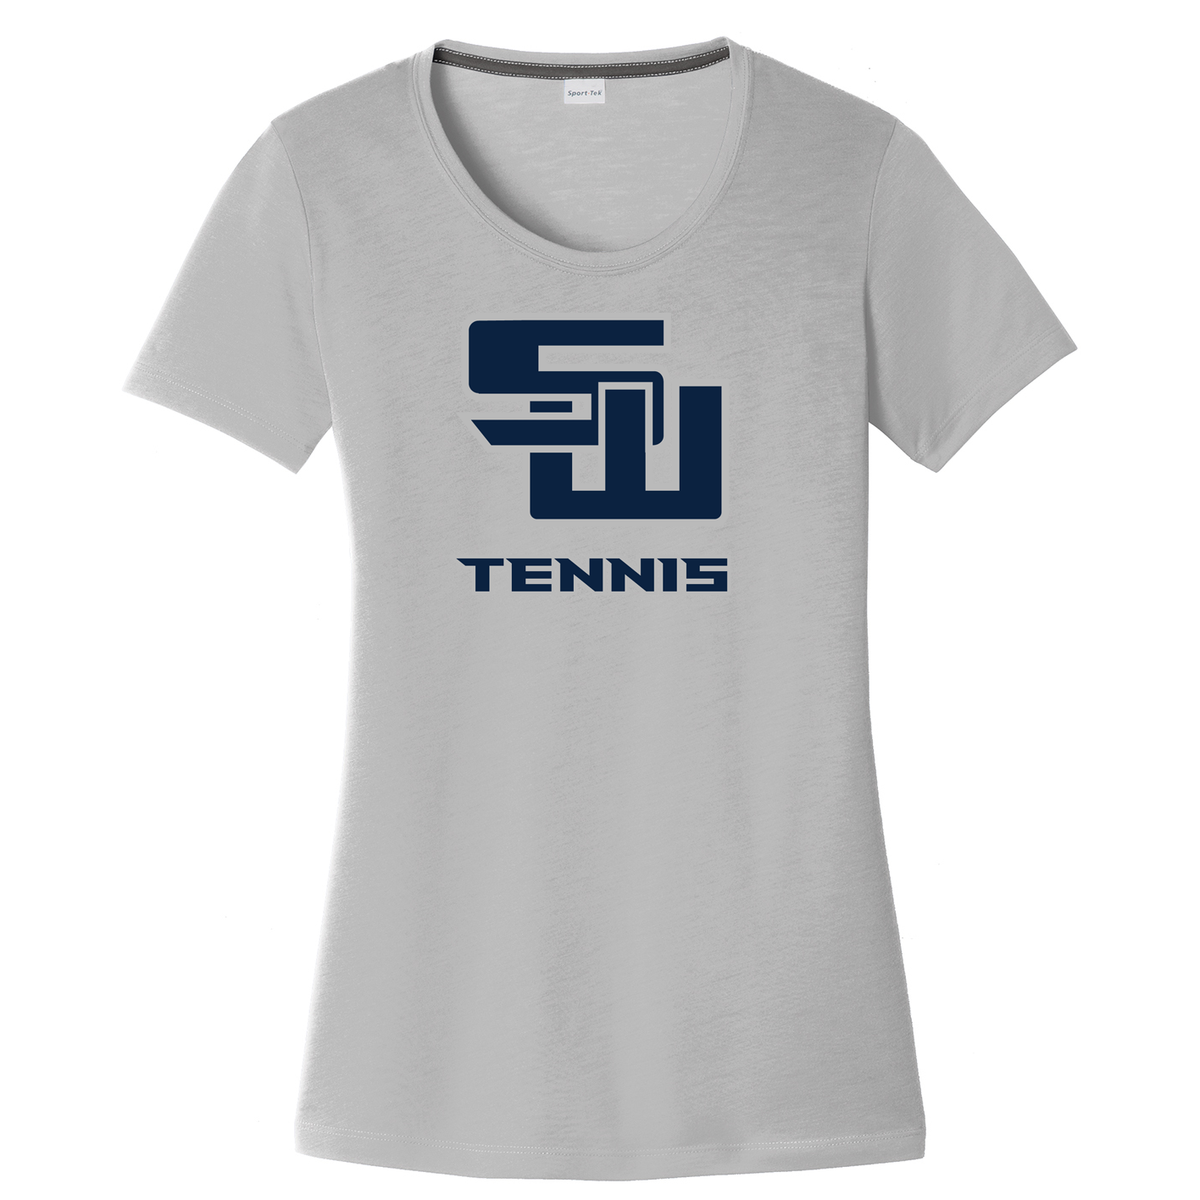 Smithtown West Tennis Women's CottonTouch Performance T-Shirt